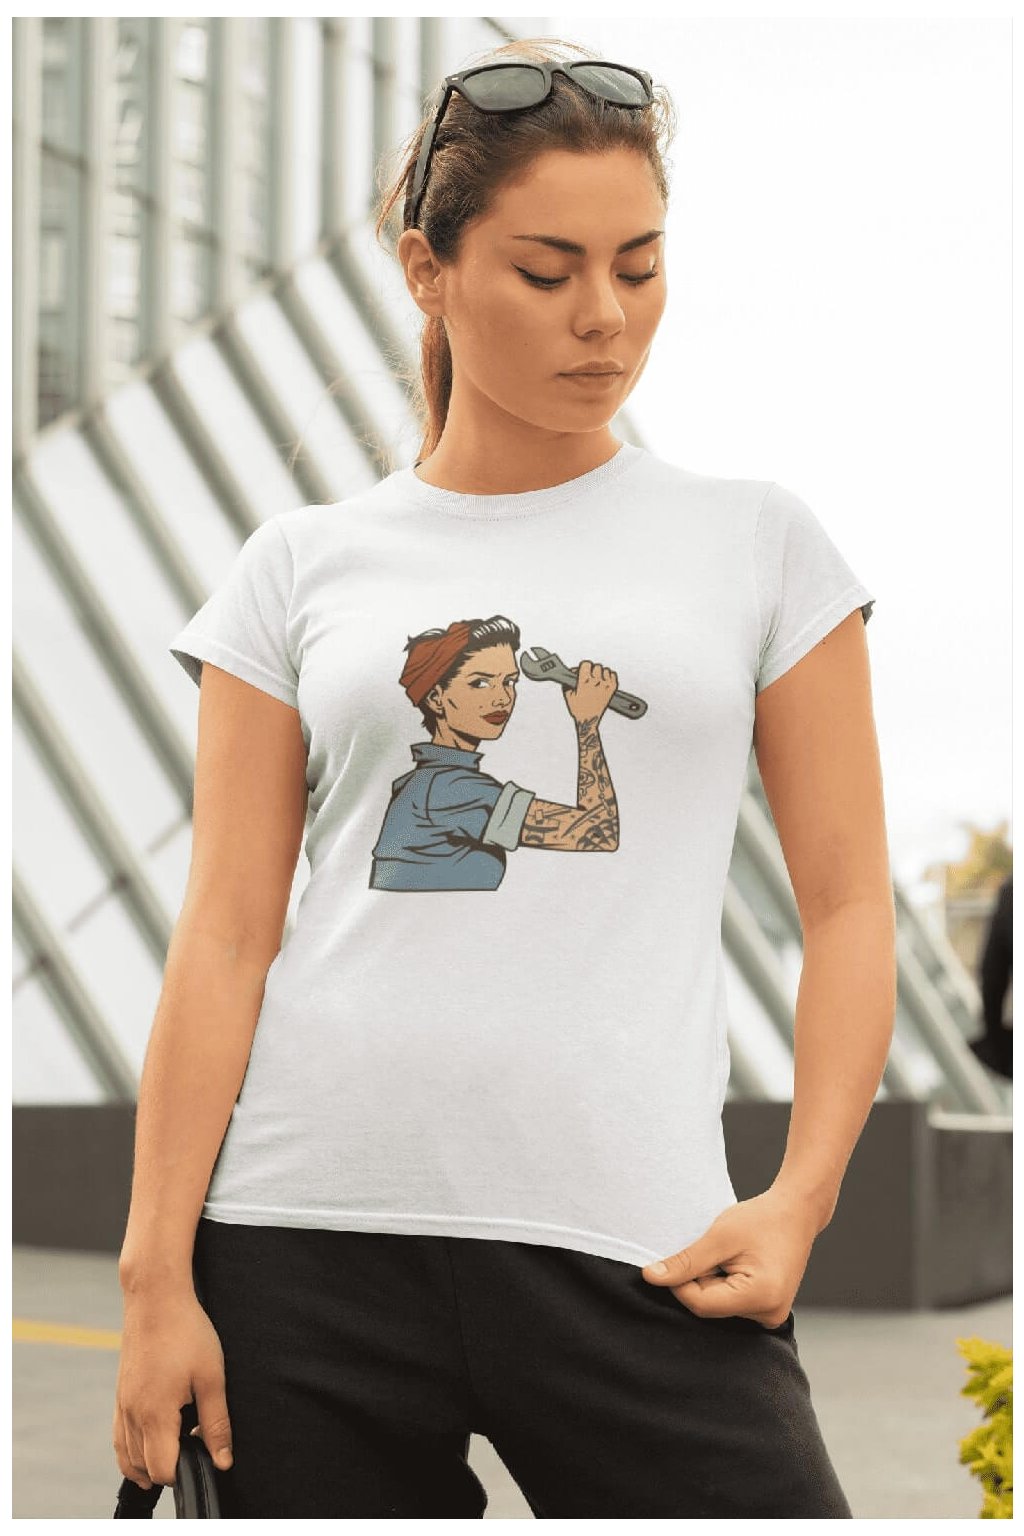 Dámske tričko Žena robotníčka